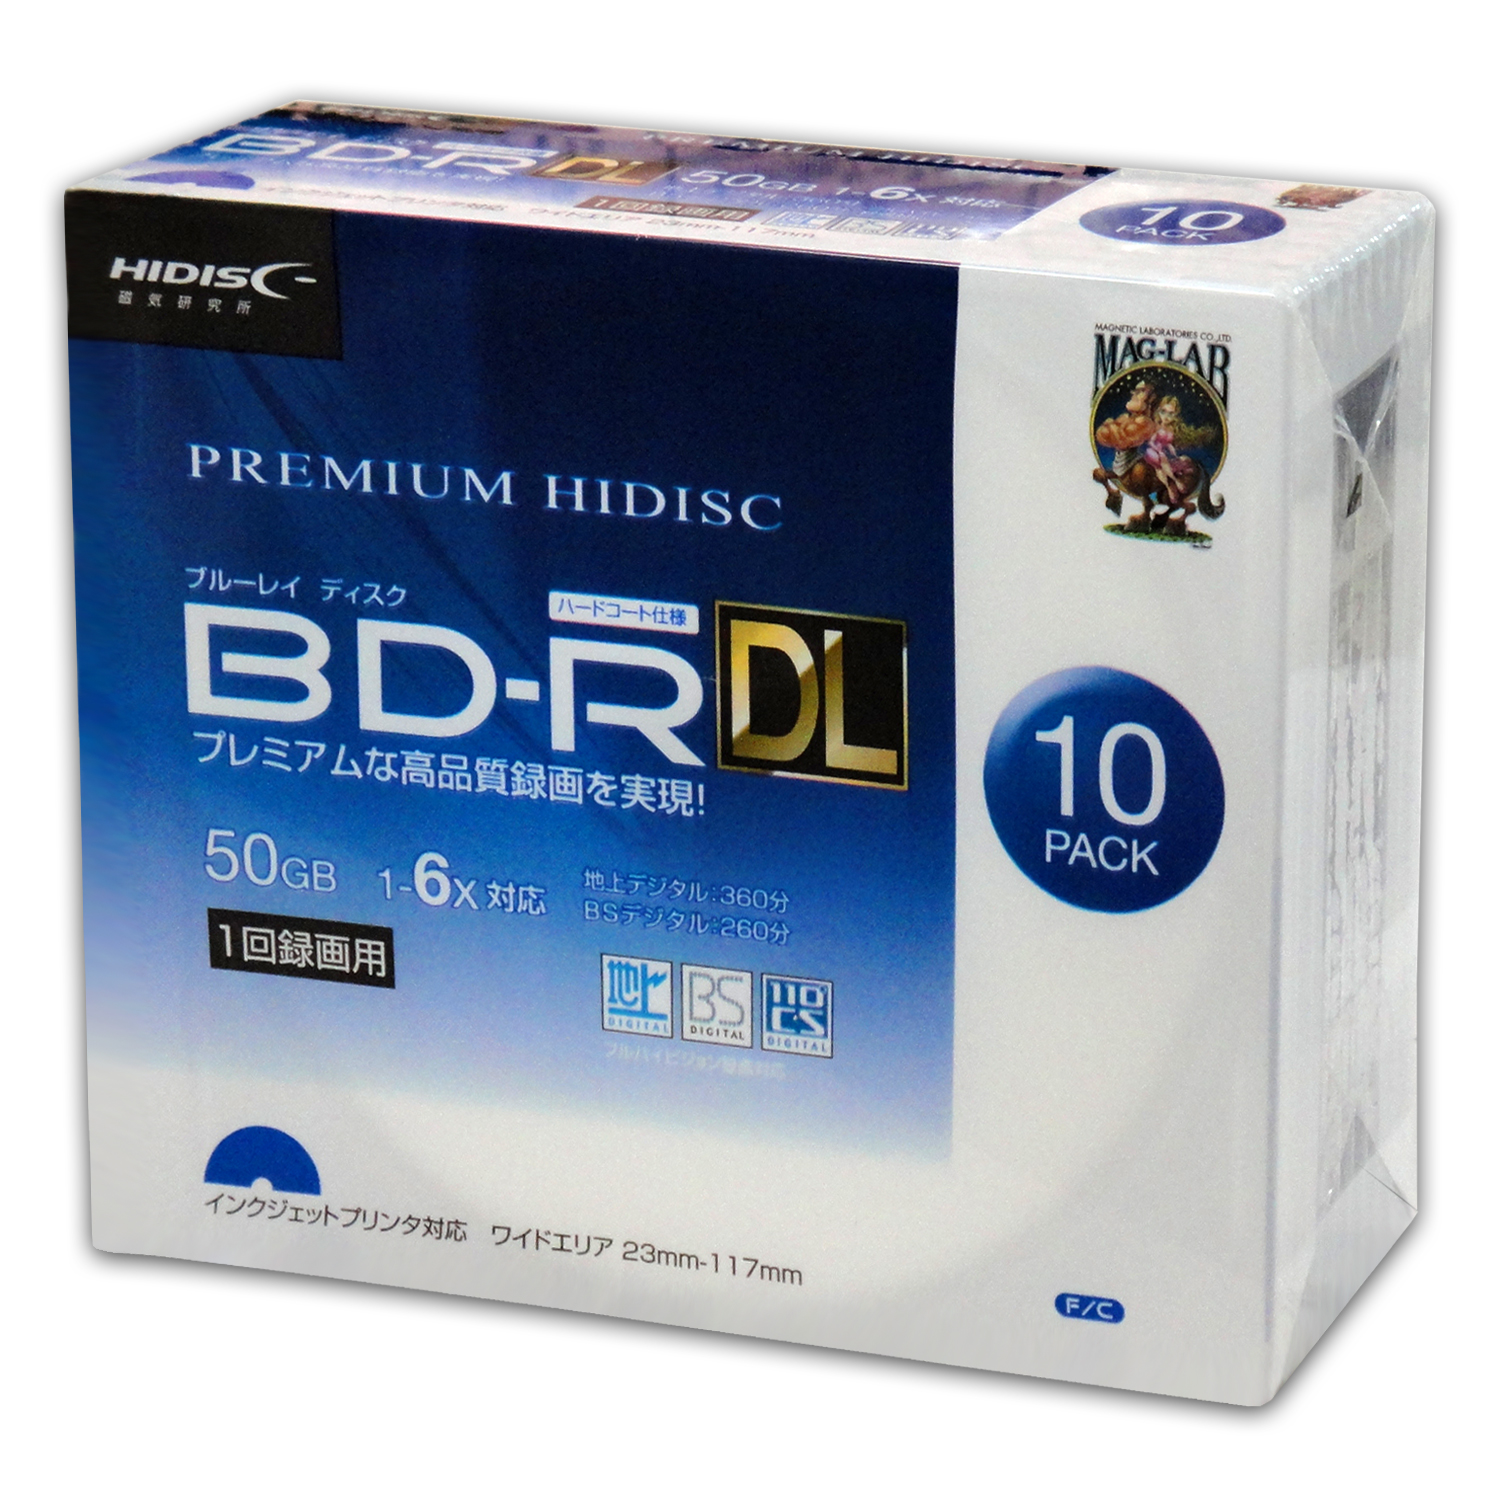 HIDISC 録画用BD-R DL 50GB 1-6倍速対応 50枚 スピンドルケース 